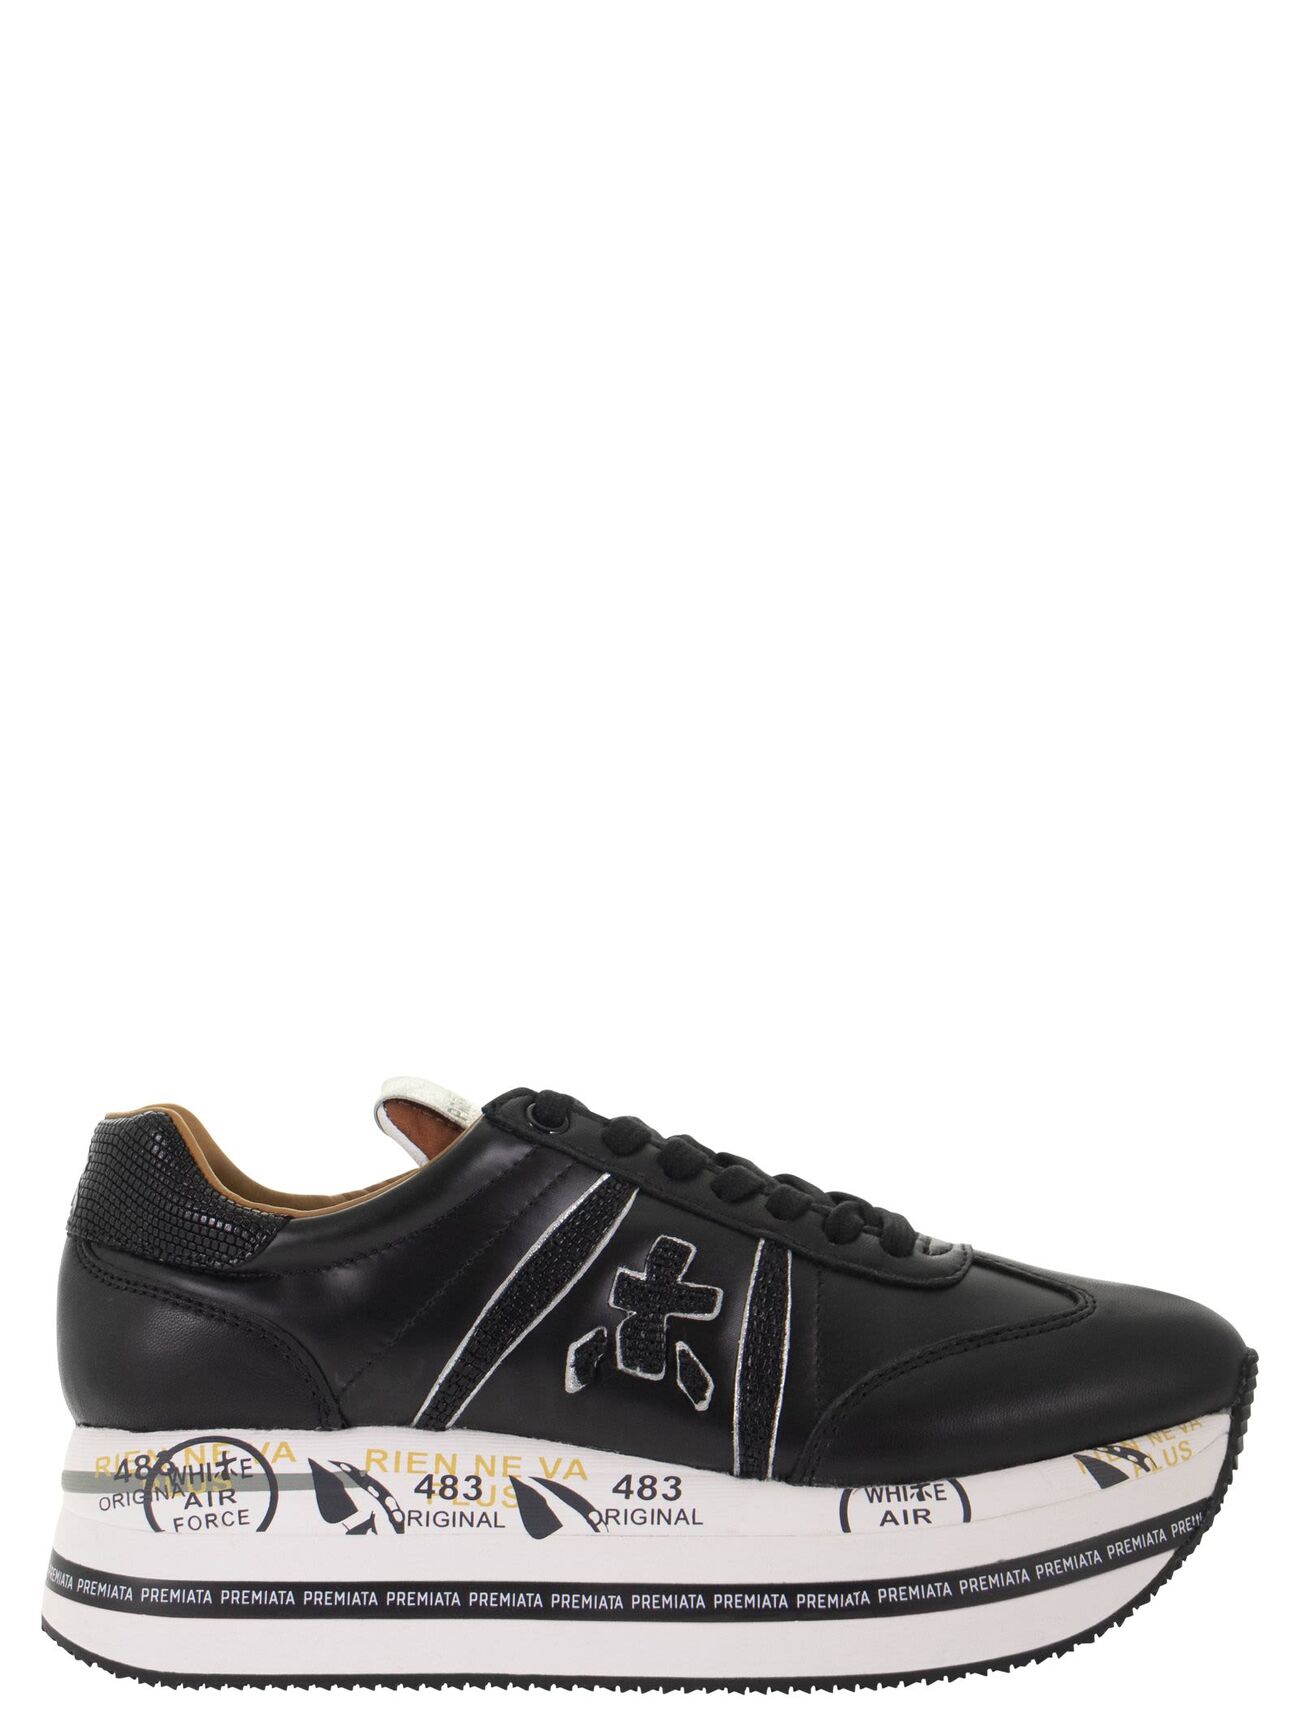 Premiata Beth 6045 - High Sneakers in black